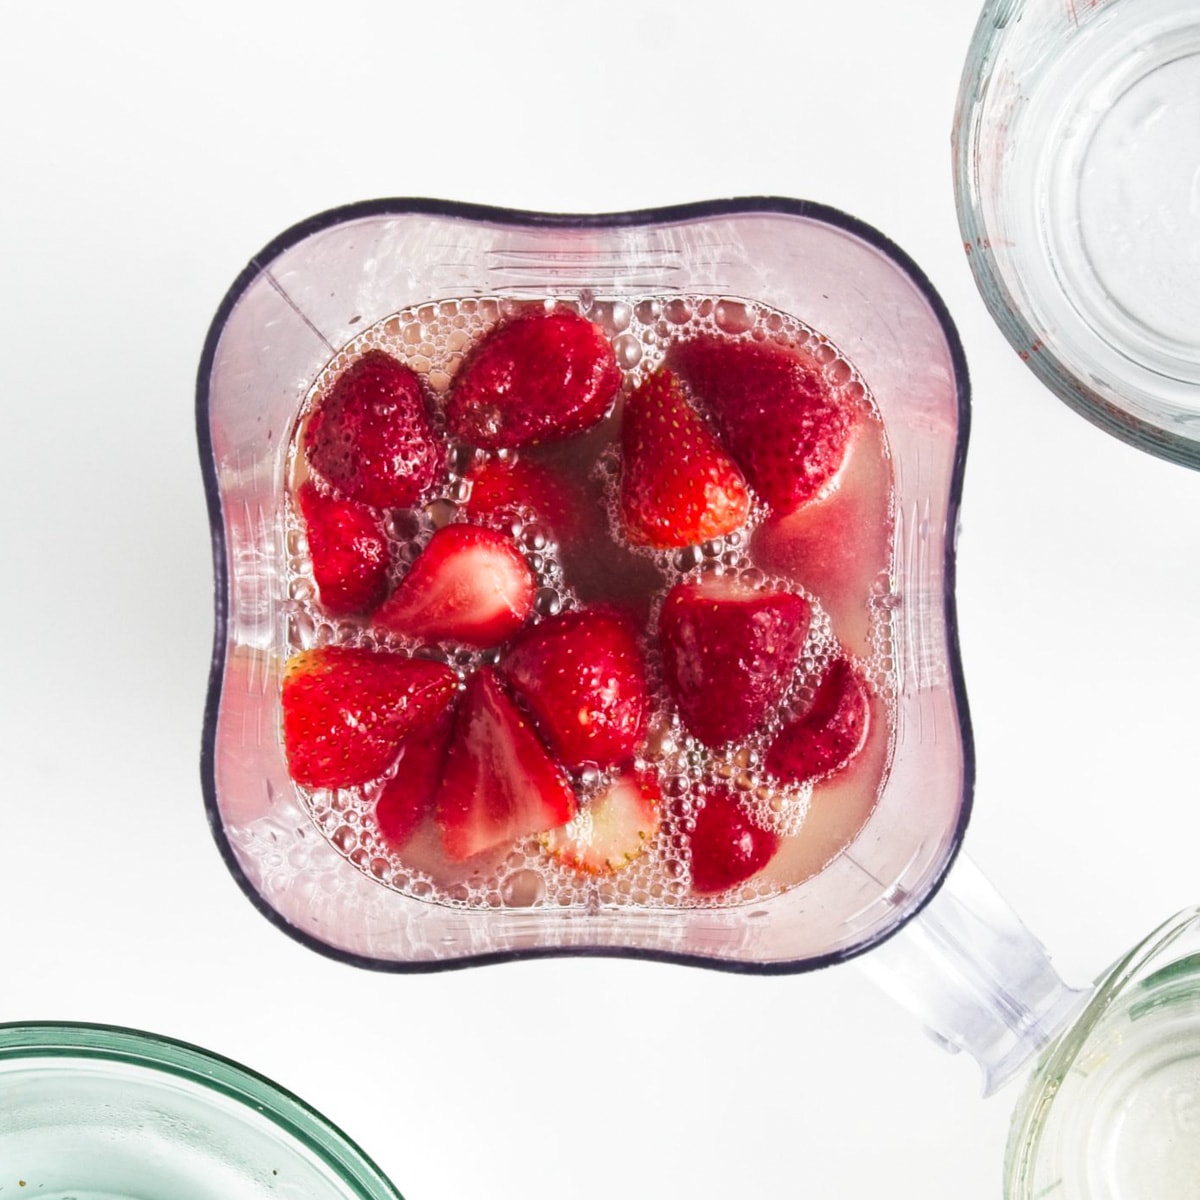 Strawberries and lemonade in a blender.